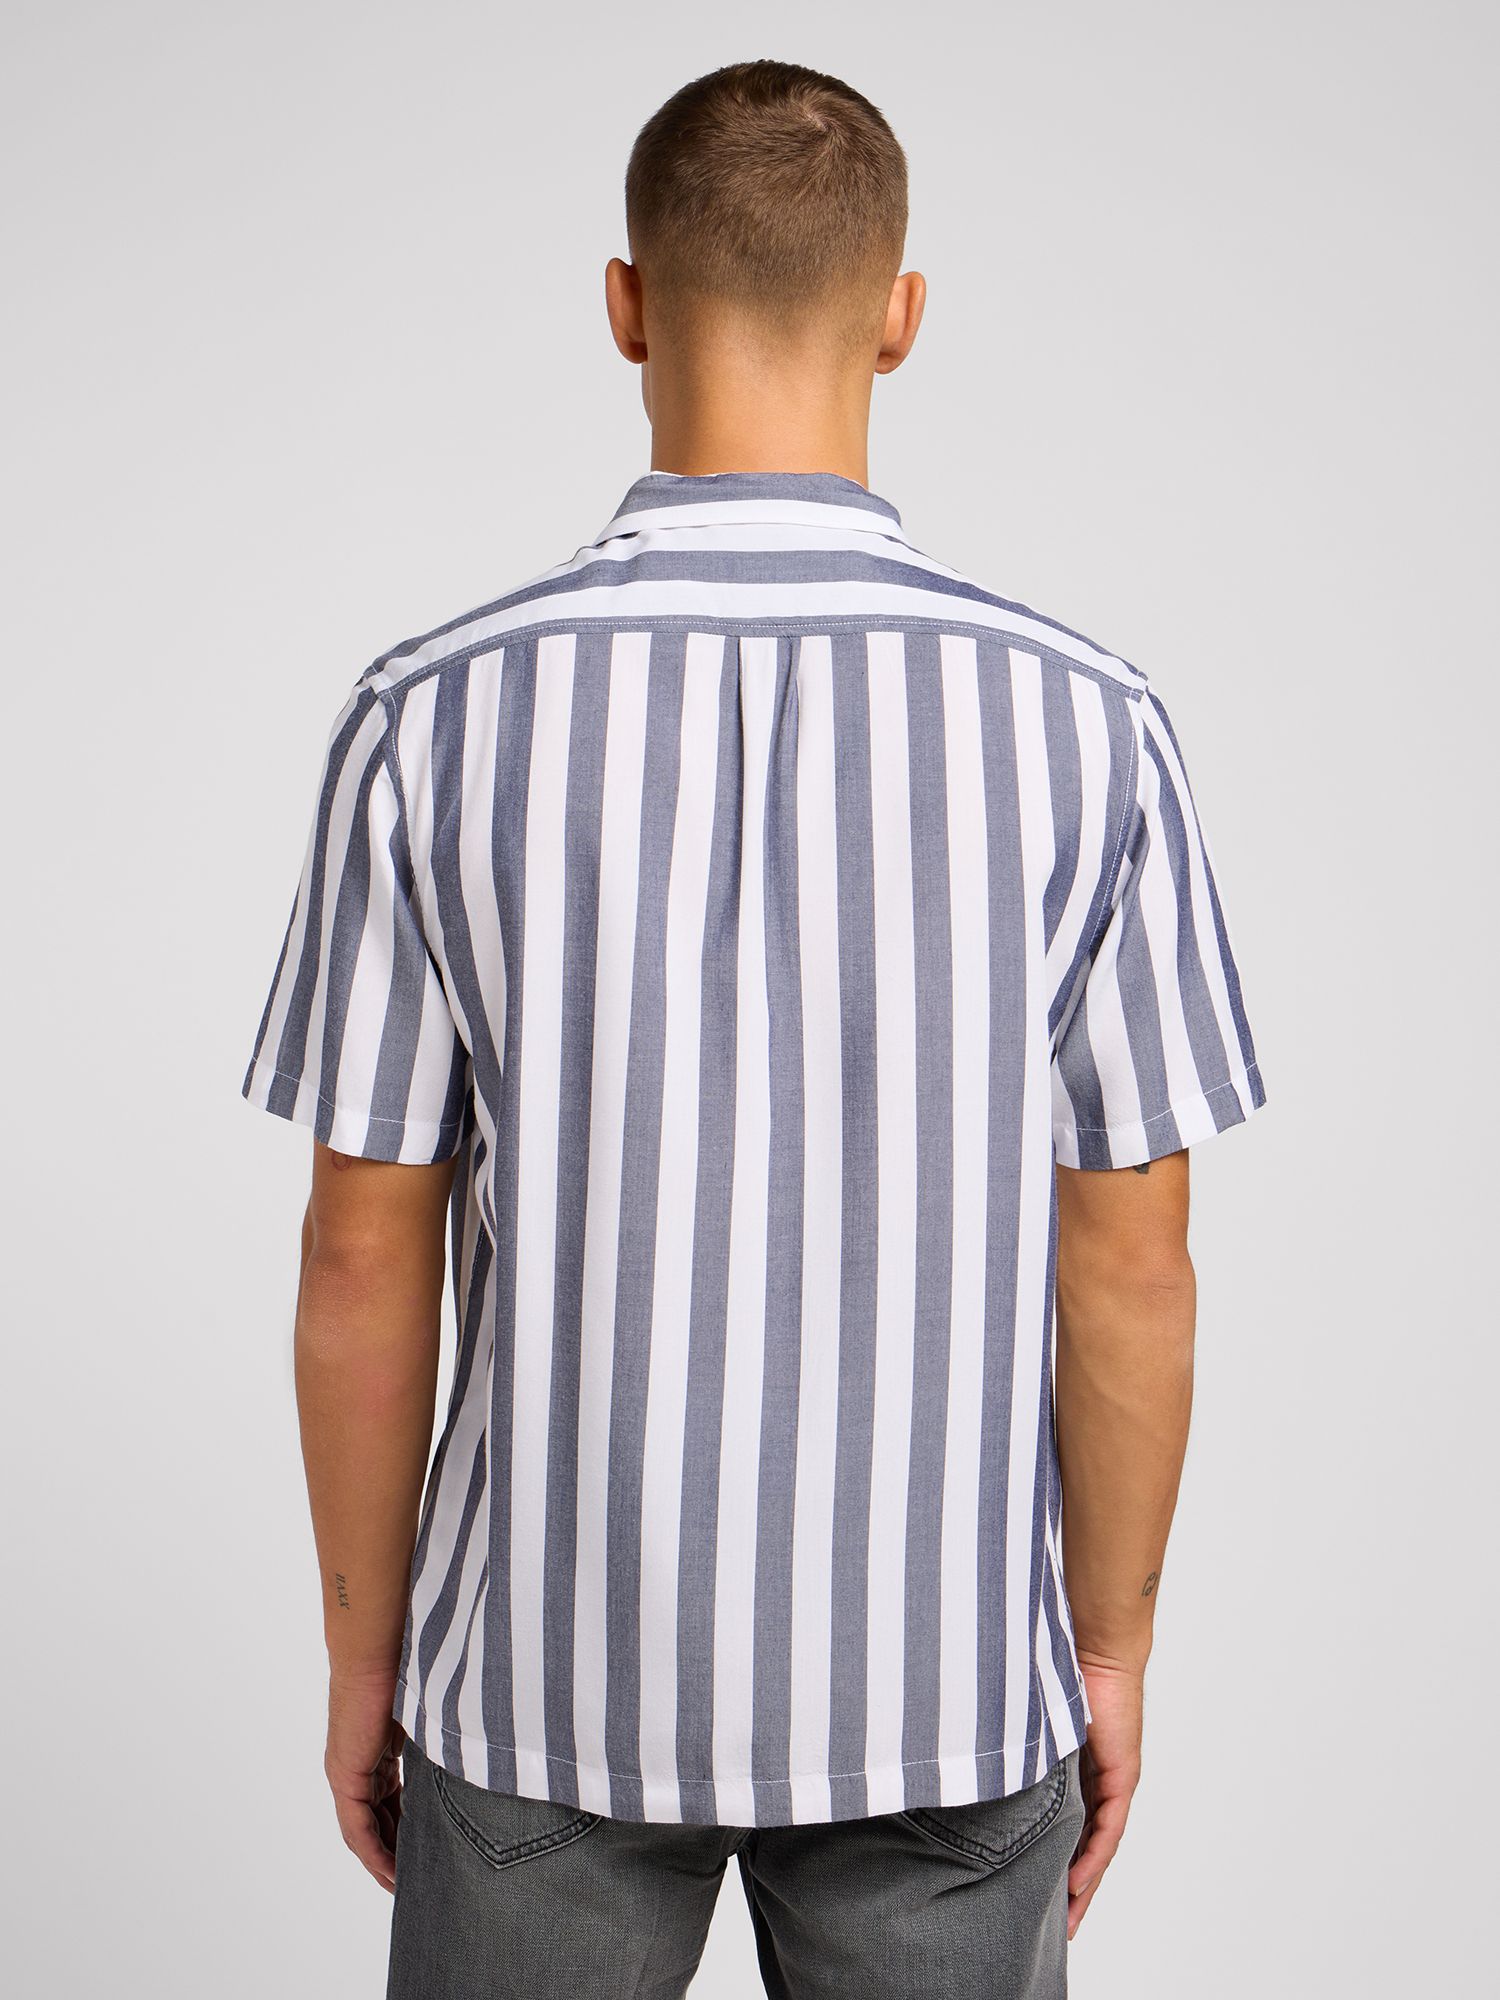 Lee Resort Stripe Short Sleeve Shirt, Blue/Multi, S